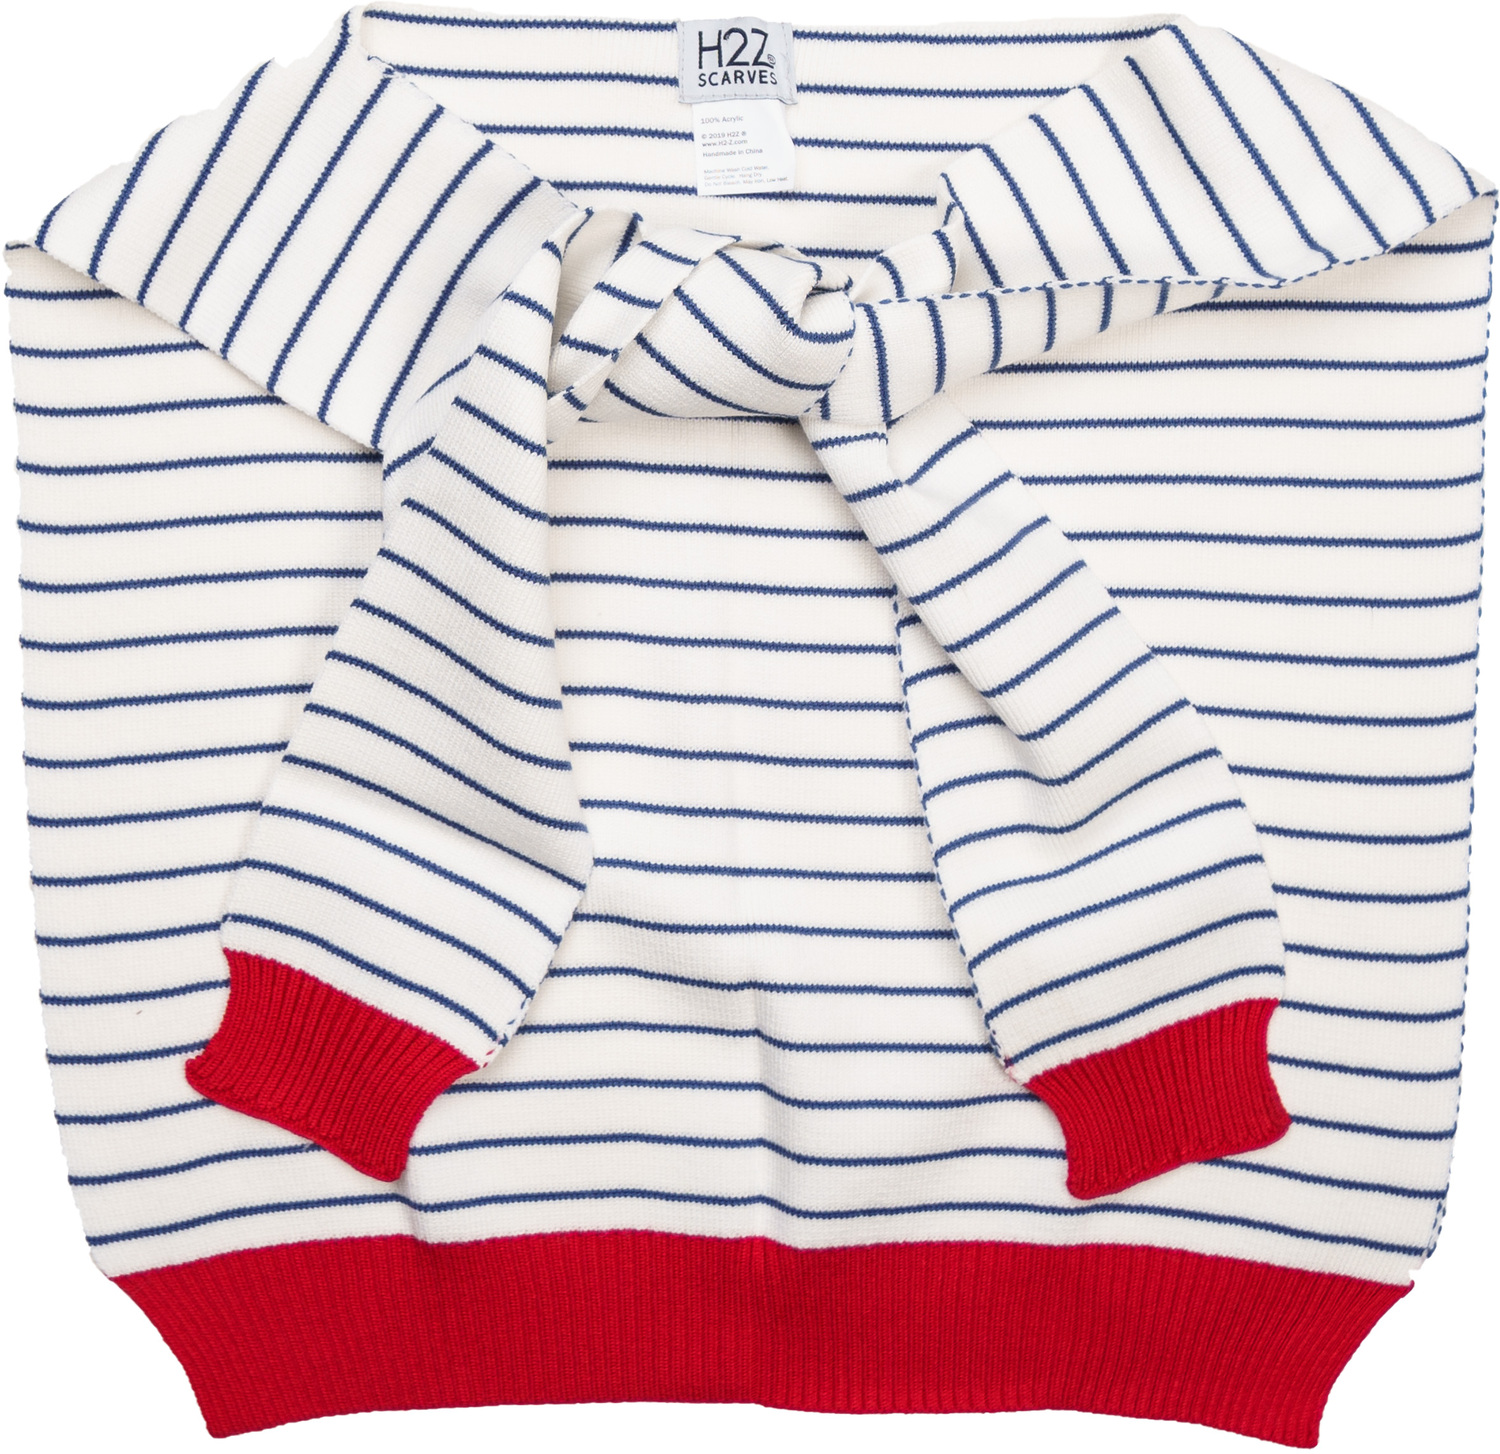 Starboard Stripes by H2Z Scarves - Starboard Stripes - 17" x 41" Faux Sweater Scarf